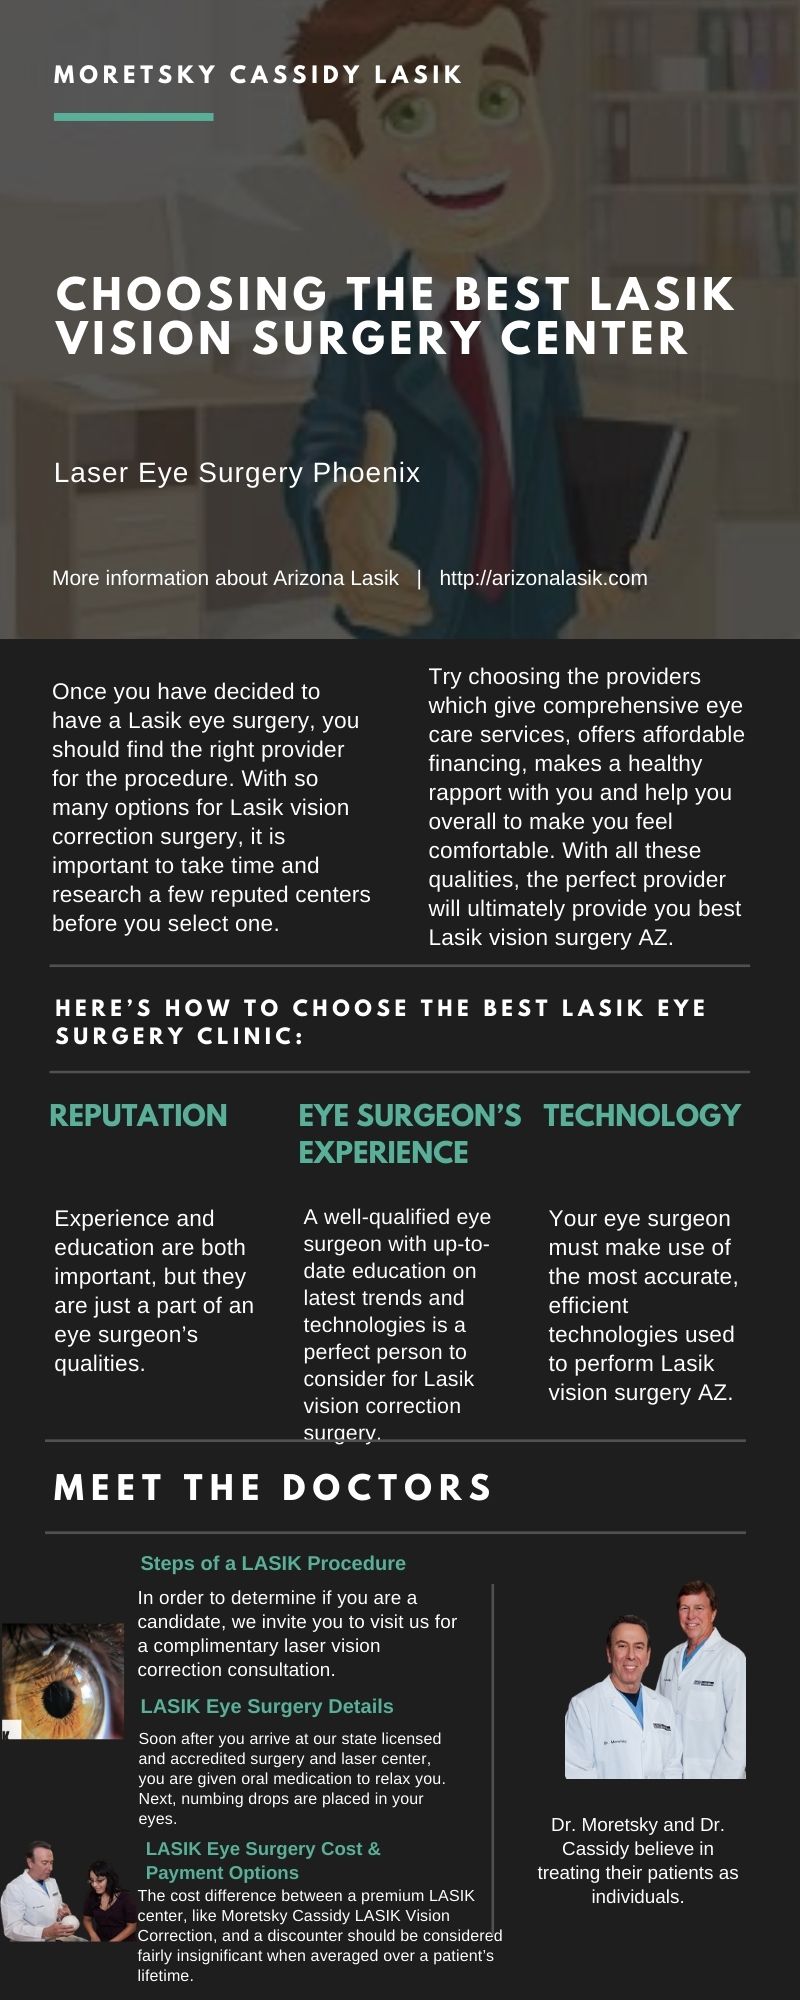 Choosing the Best Lasik Vision Surgery Center.jpg  by ArizonaLasik